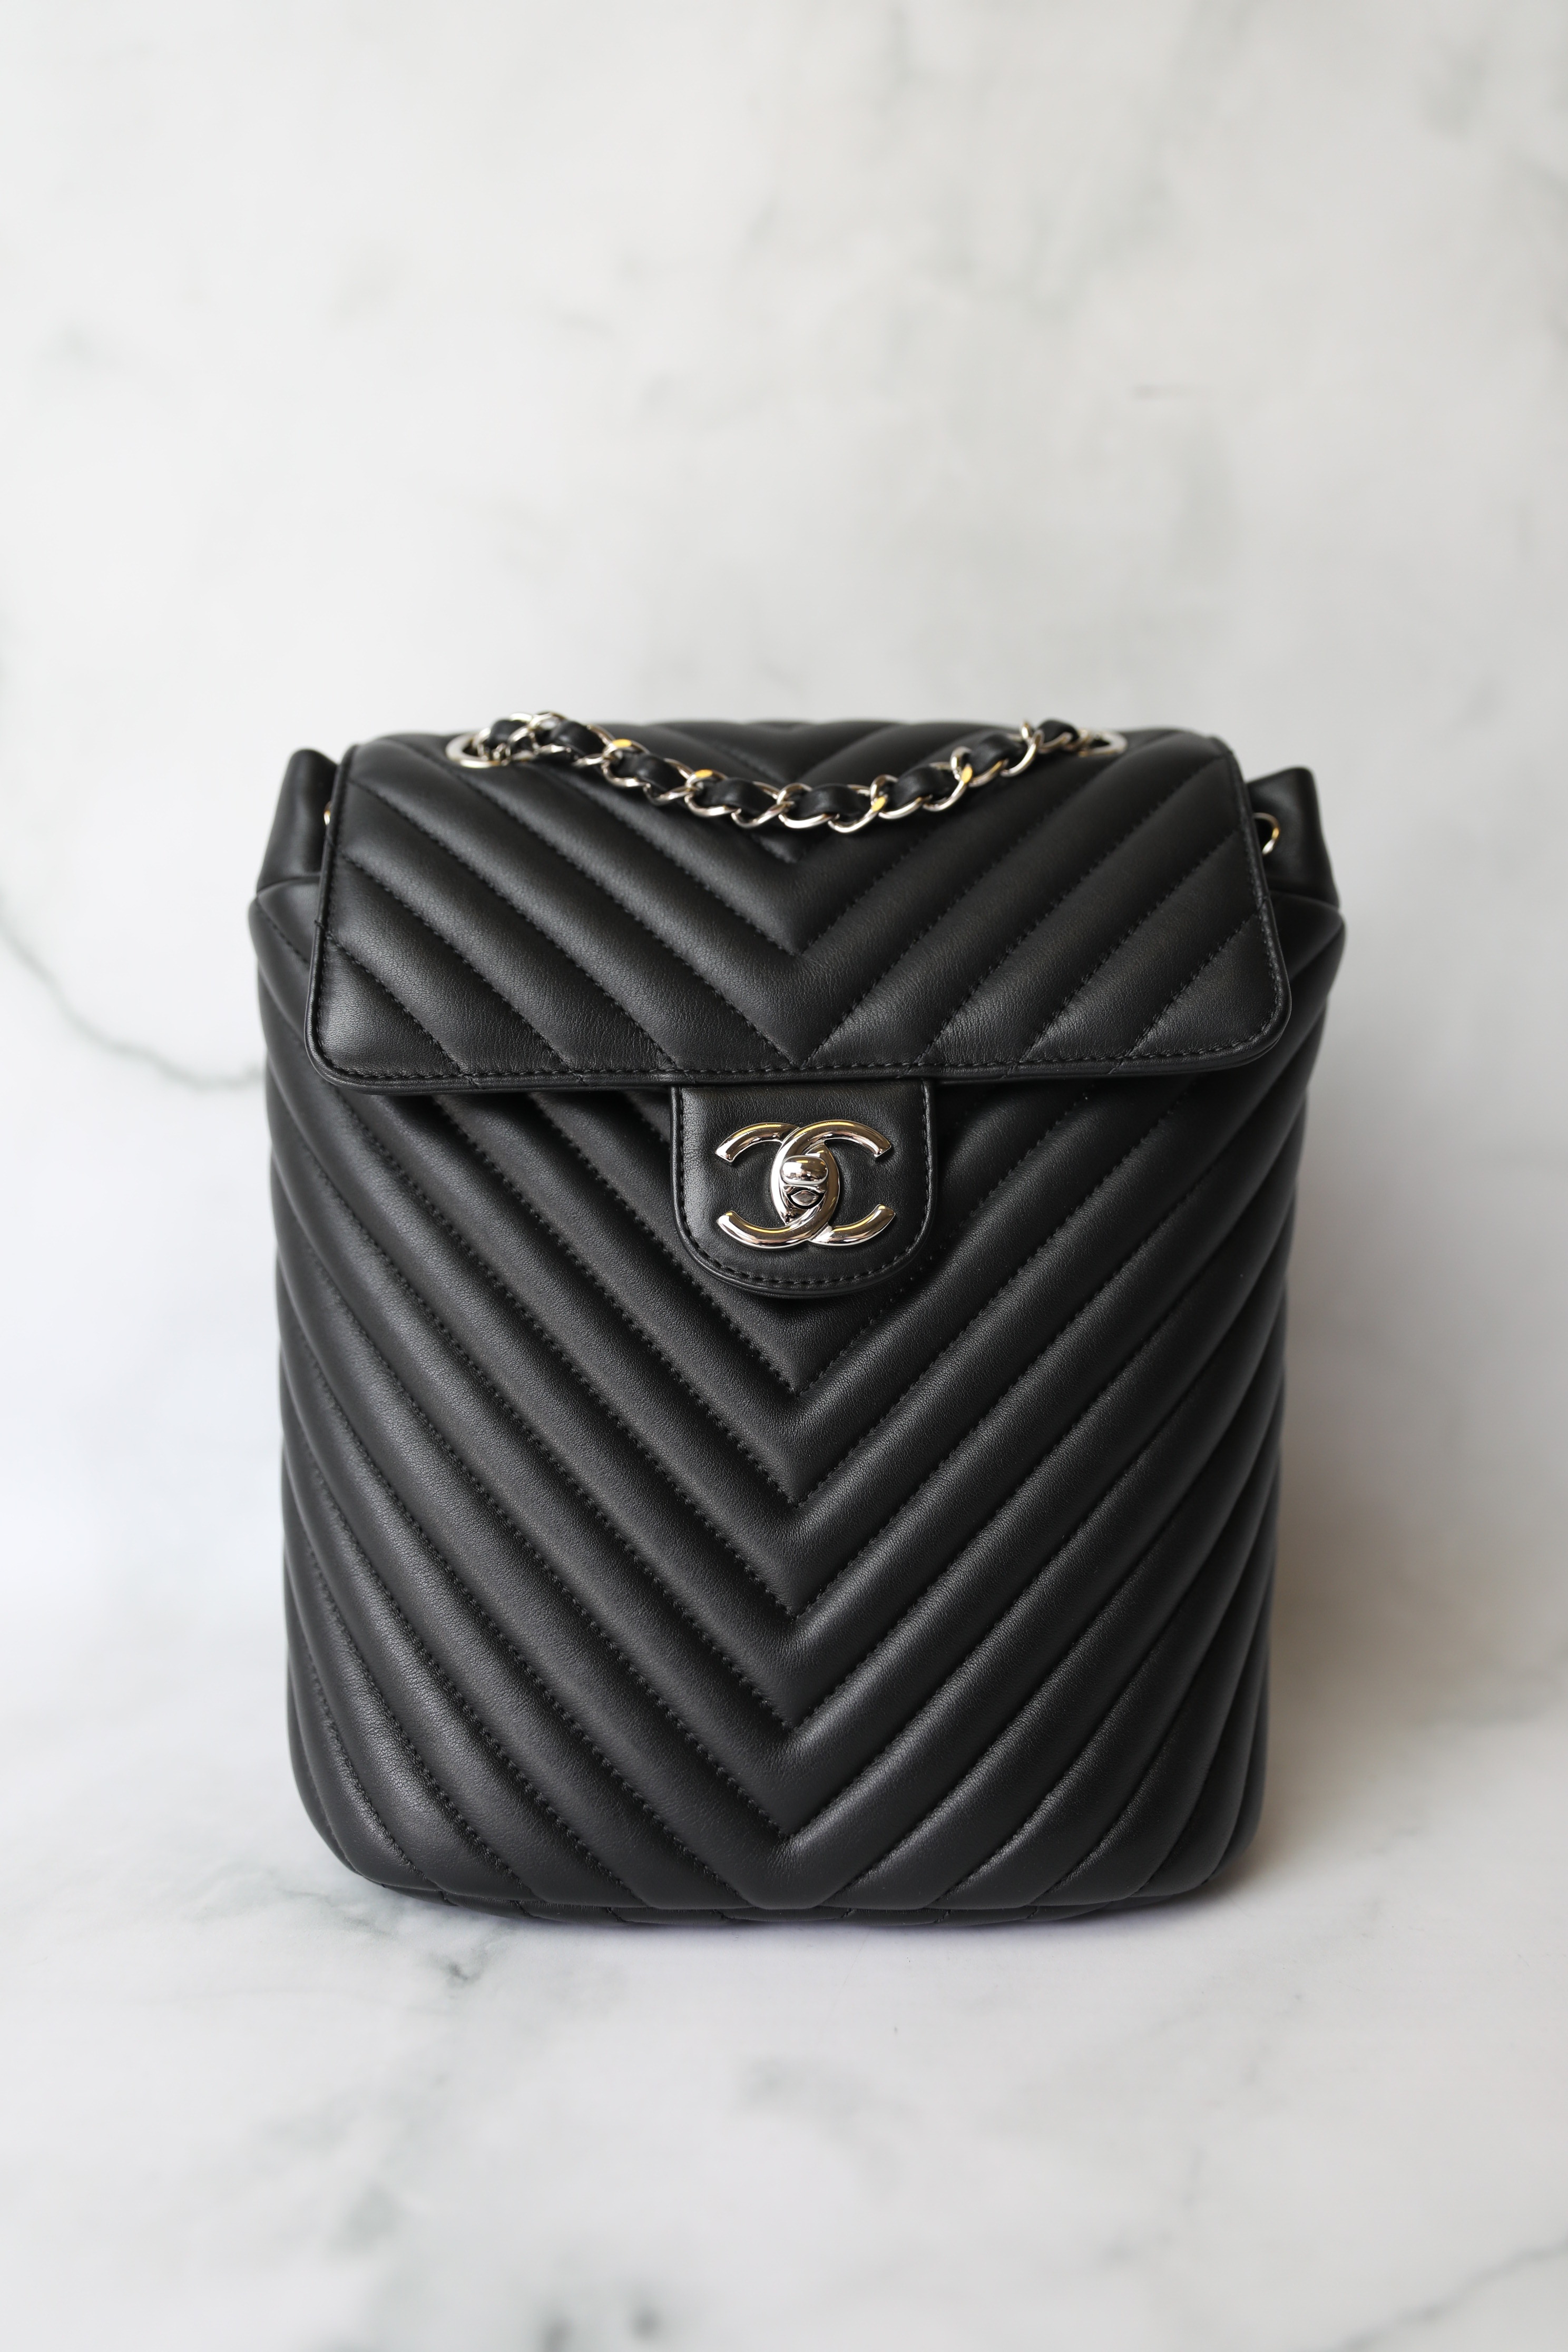 Chanel Urban Spirit Backpack Small, Black Lambskin with Silver Hardware,  Preowned in Box WA001 - Julia Rose Boston